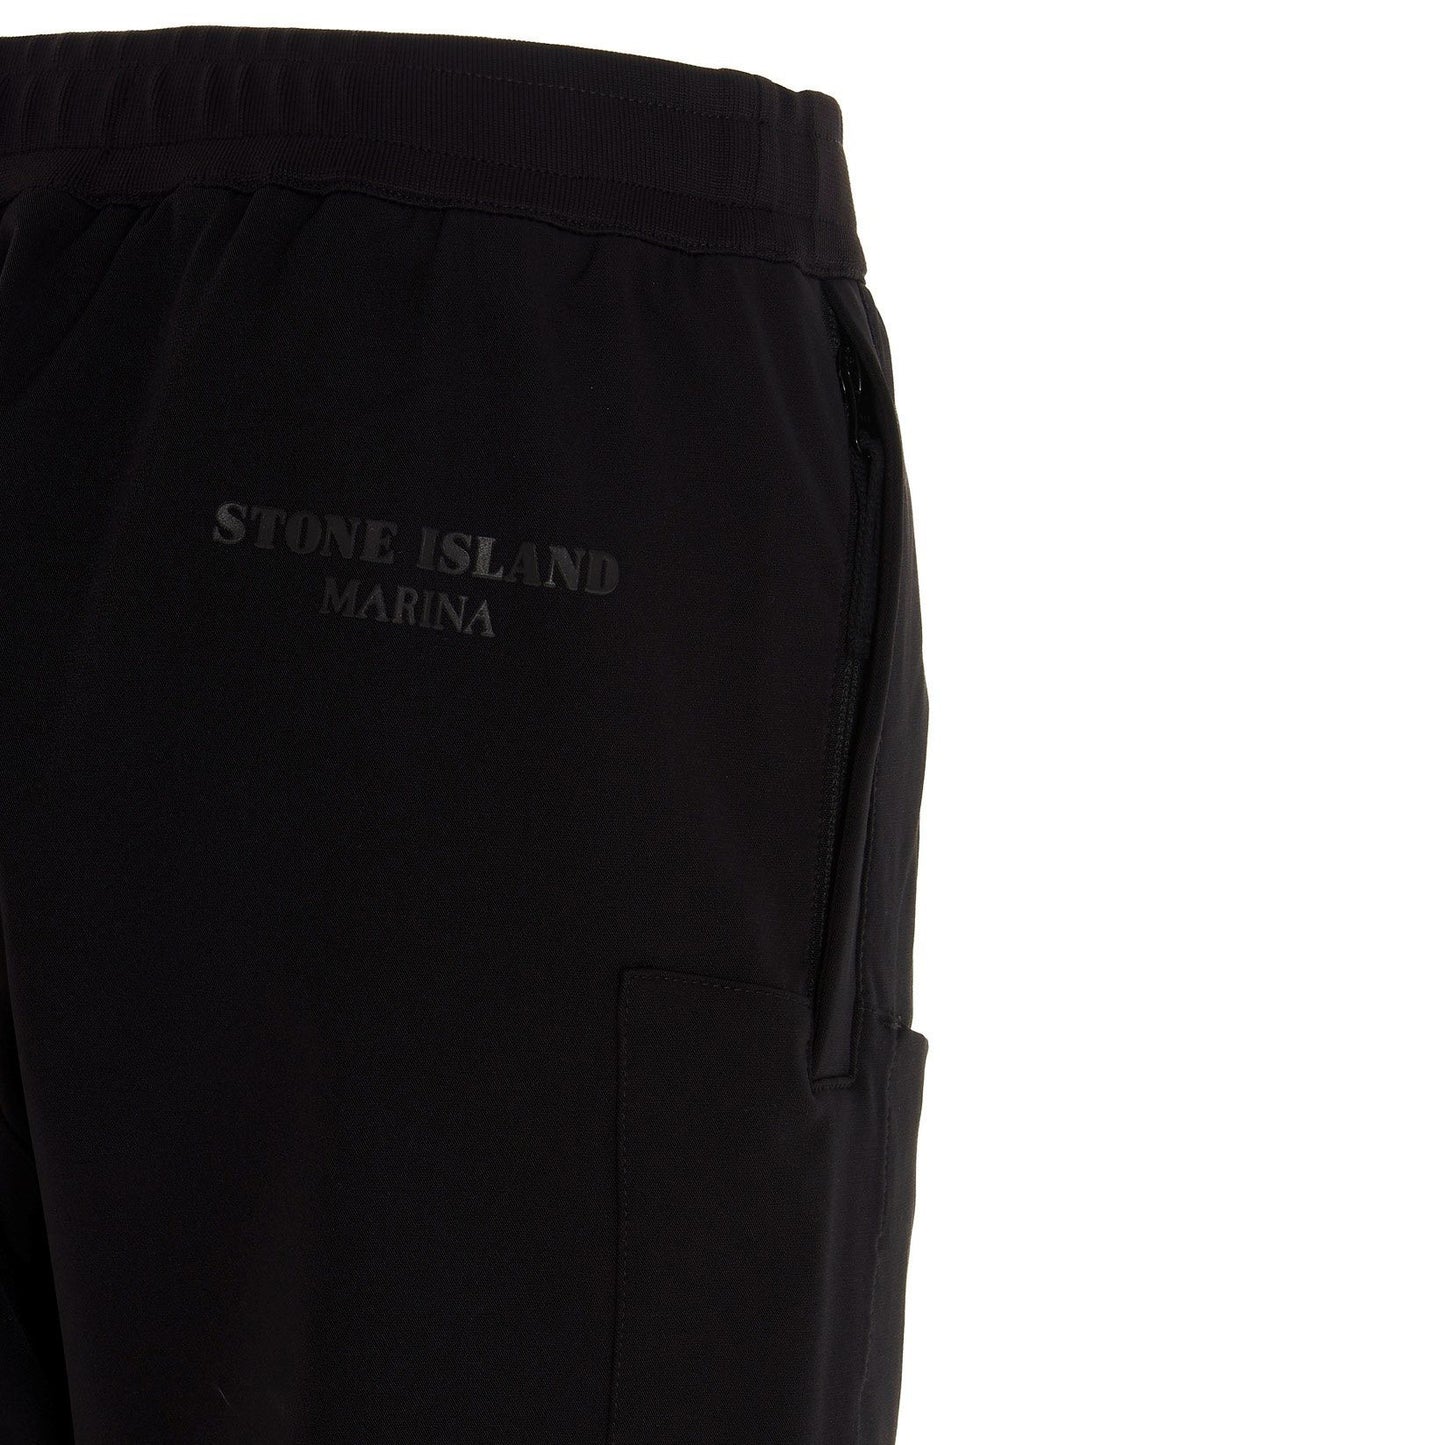 Stone Island Black Marina Cargo Pants Cargo Pants Stone Island 